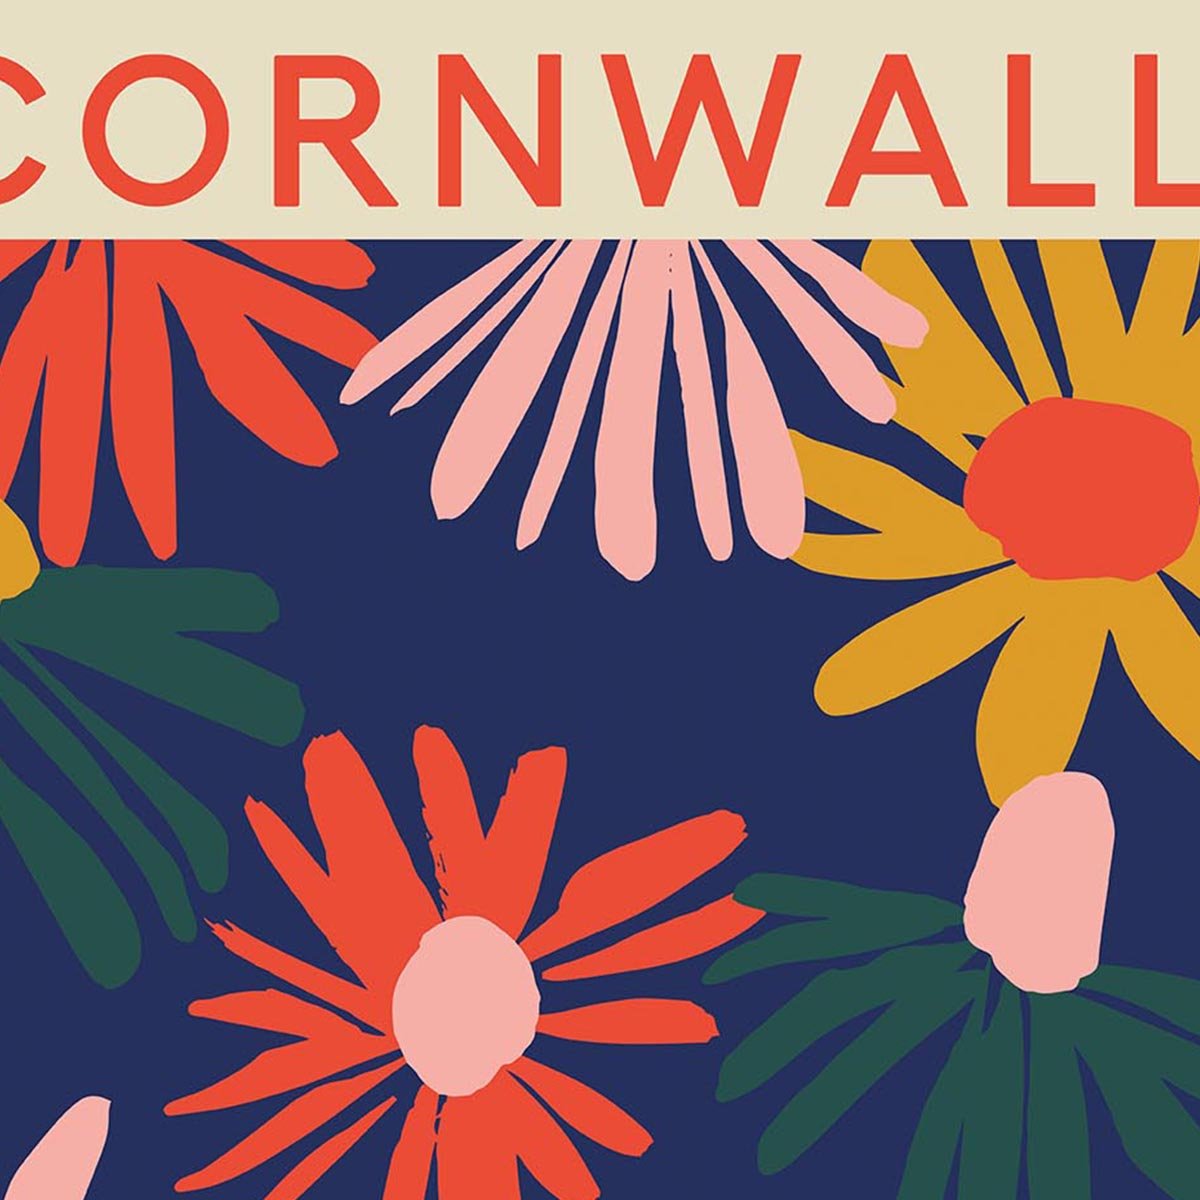 Cornwall Flower Market Poster